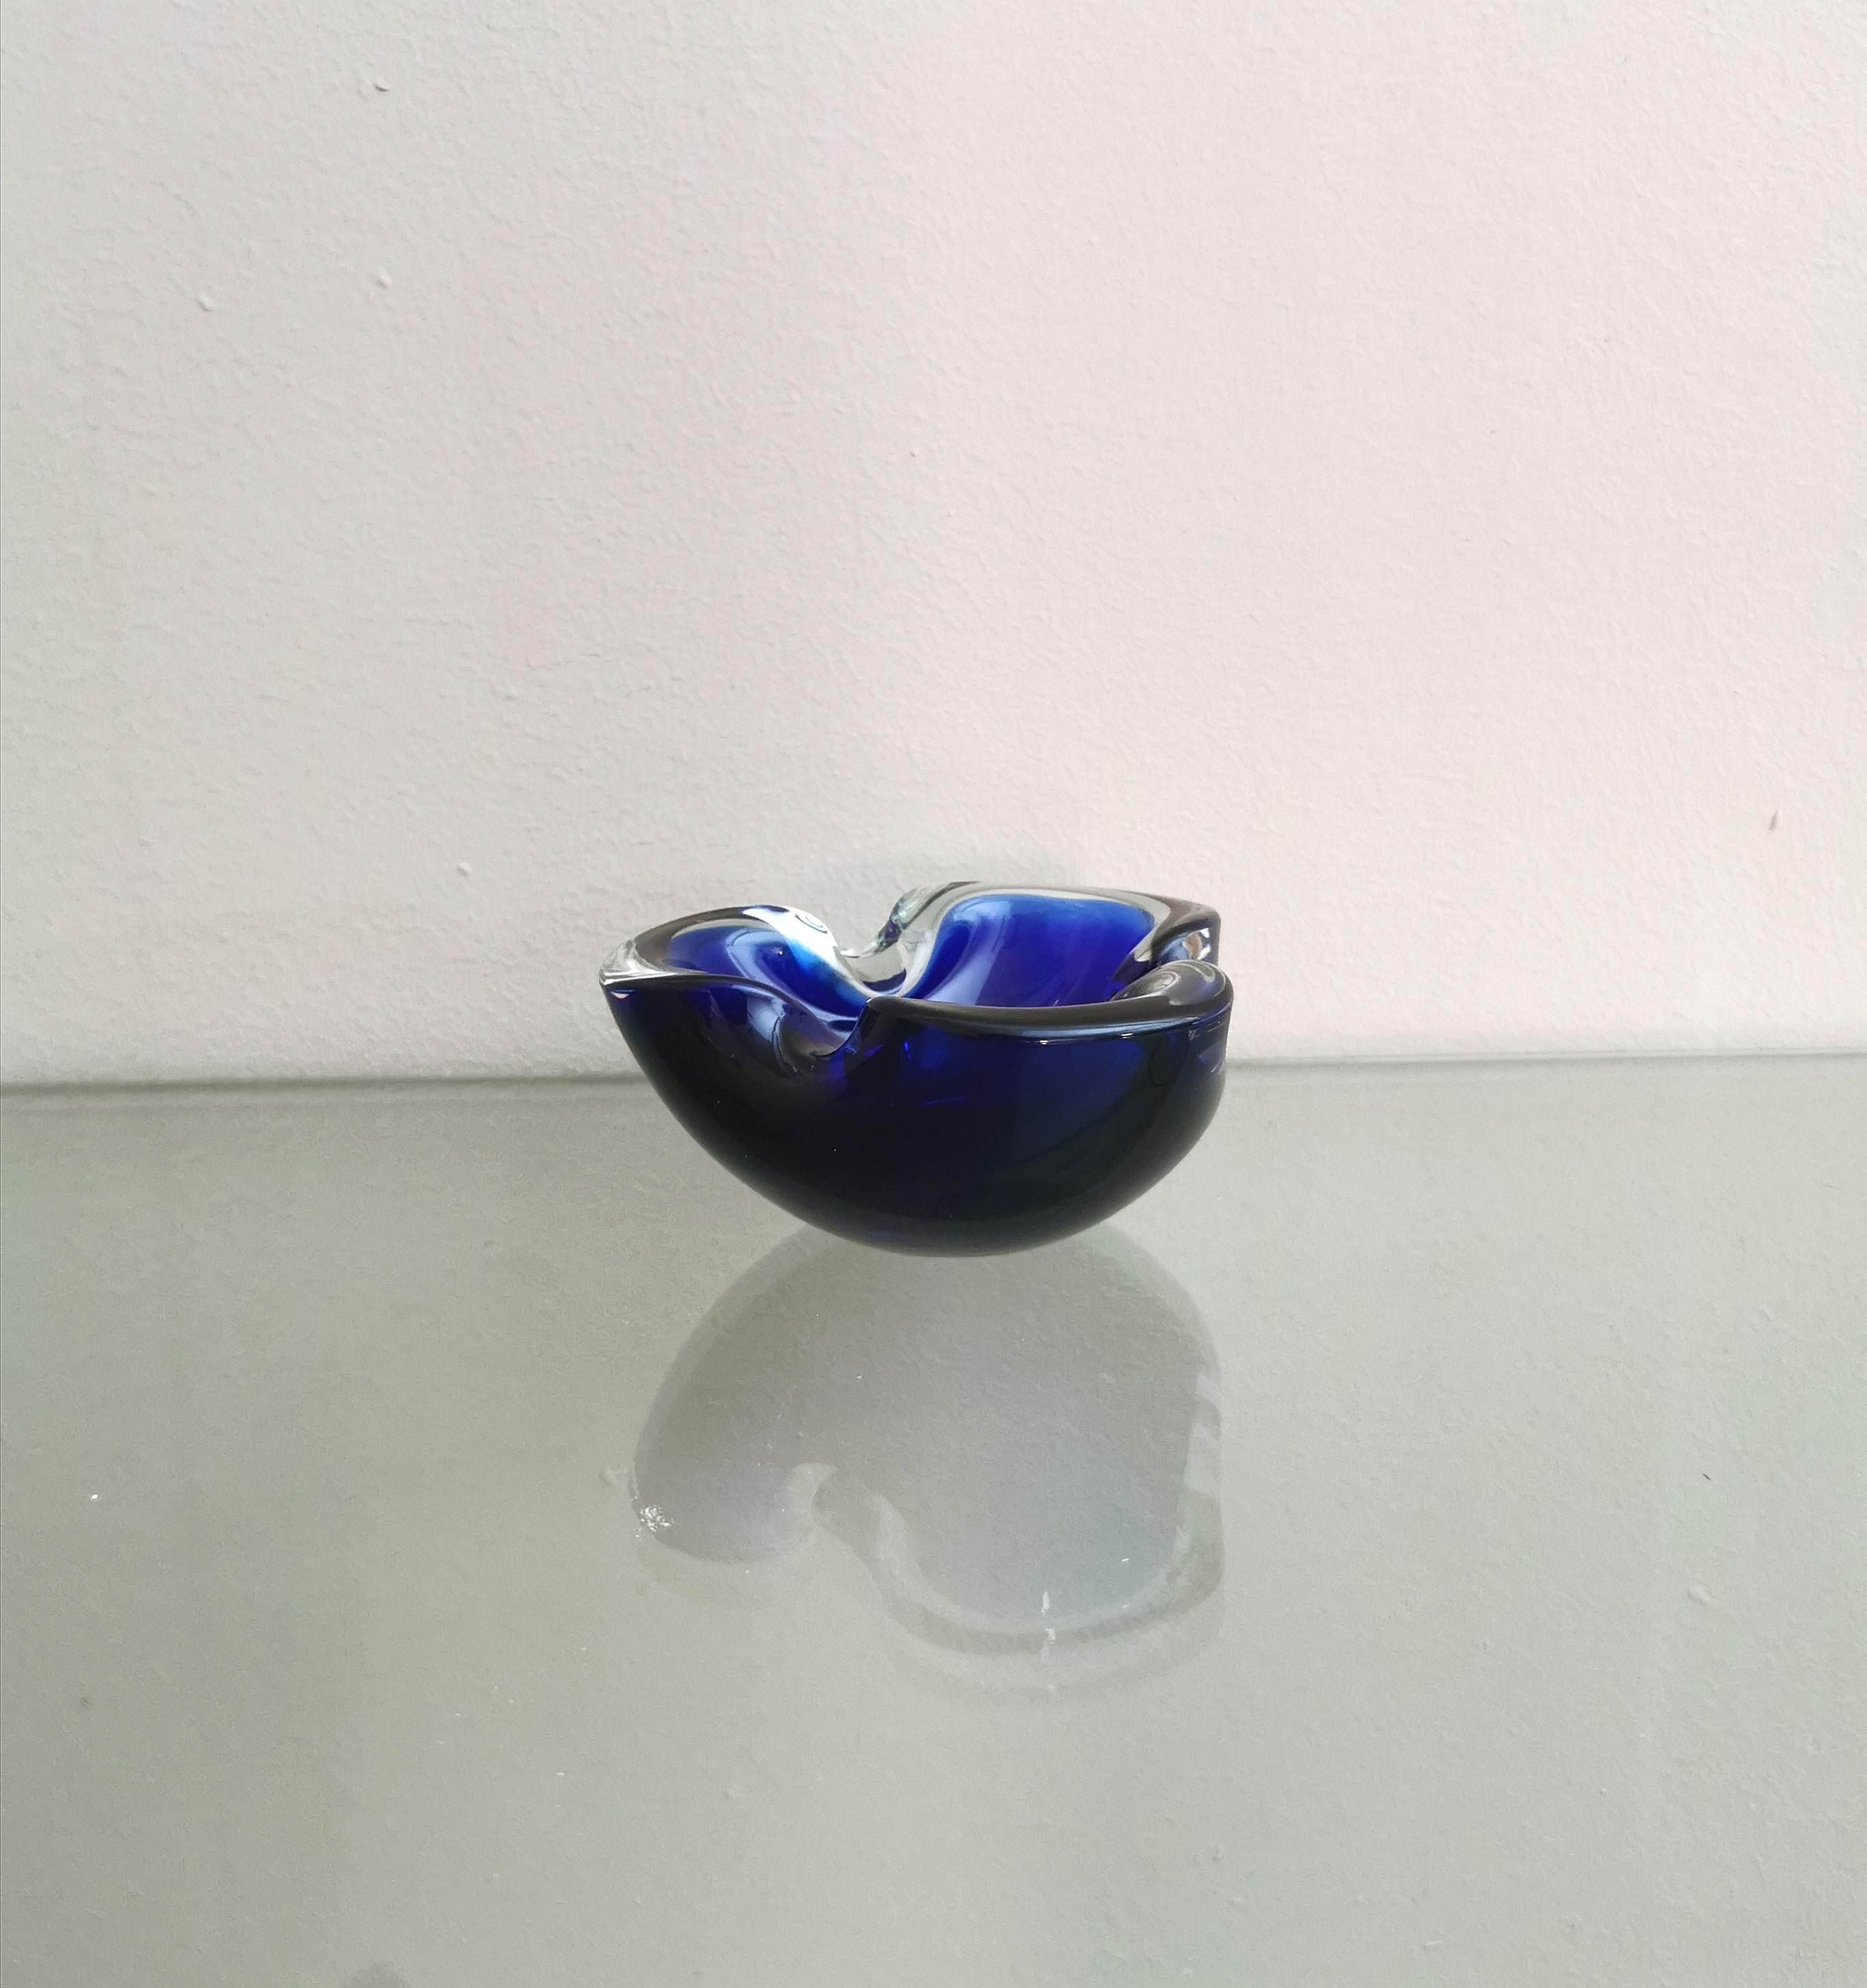 20th Century Ashtray Murano Glass Sommerso Blue Flavio Poli Midcentury Italian Design 1970s